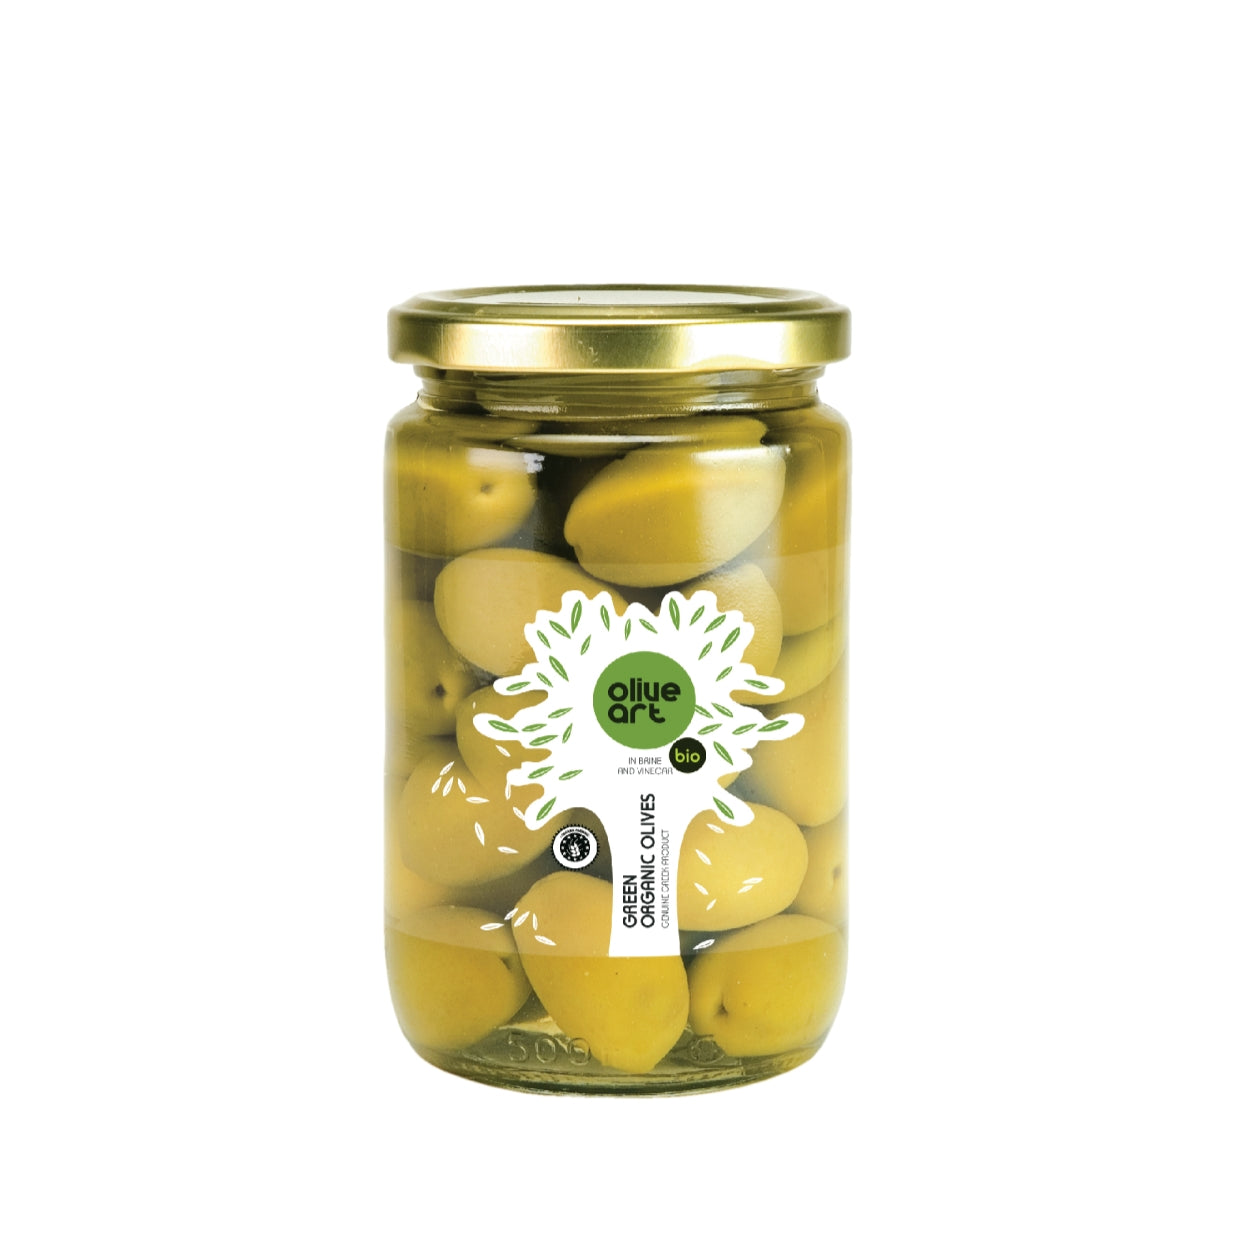 OLIVE ART Organic Green Olives, 370g